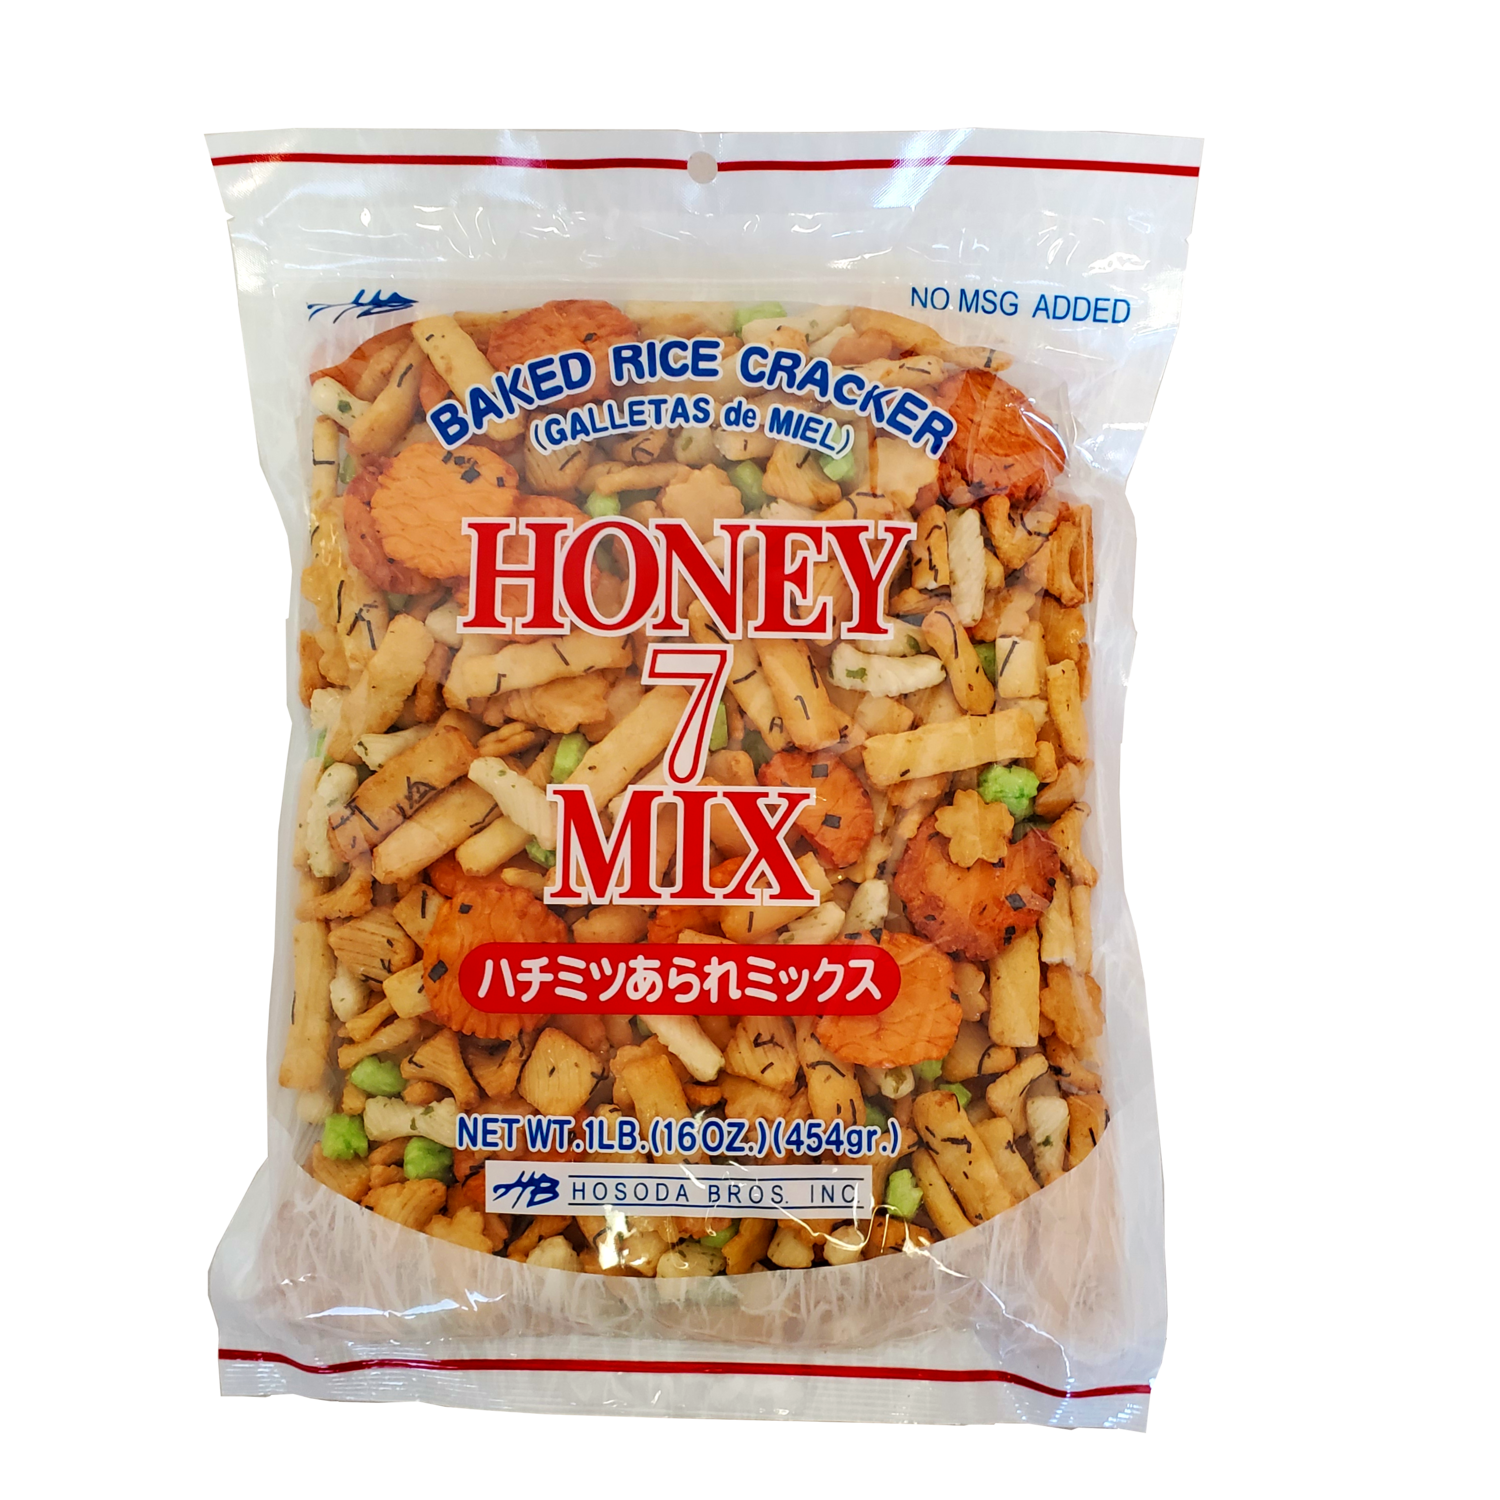 HB Honey 7 Mix 16 oz | Baked Honey Rice Crackers